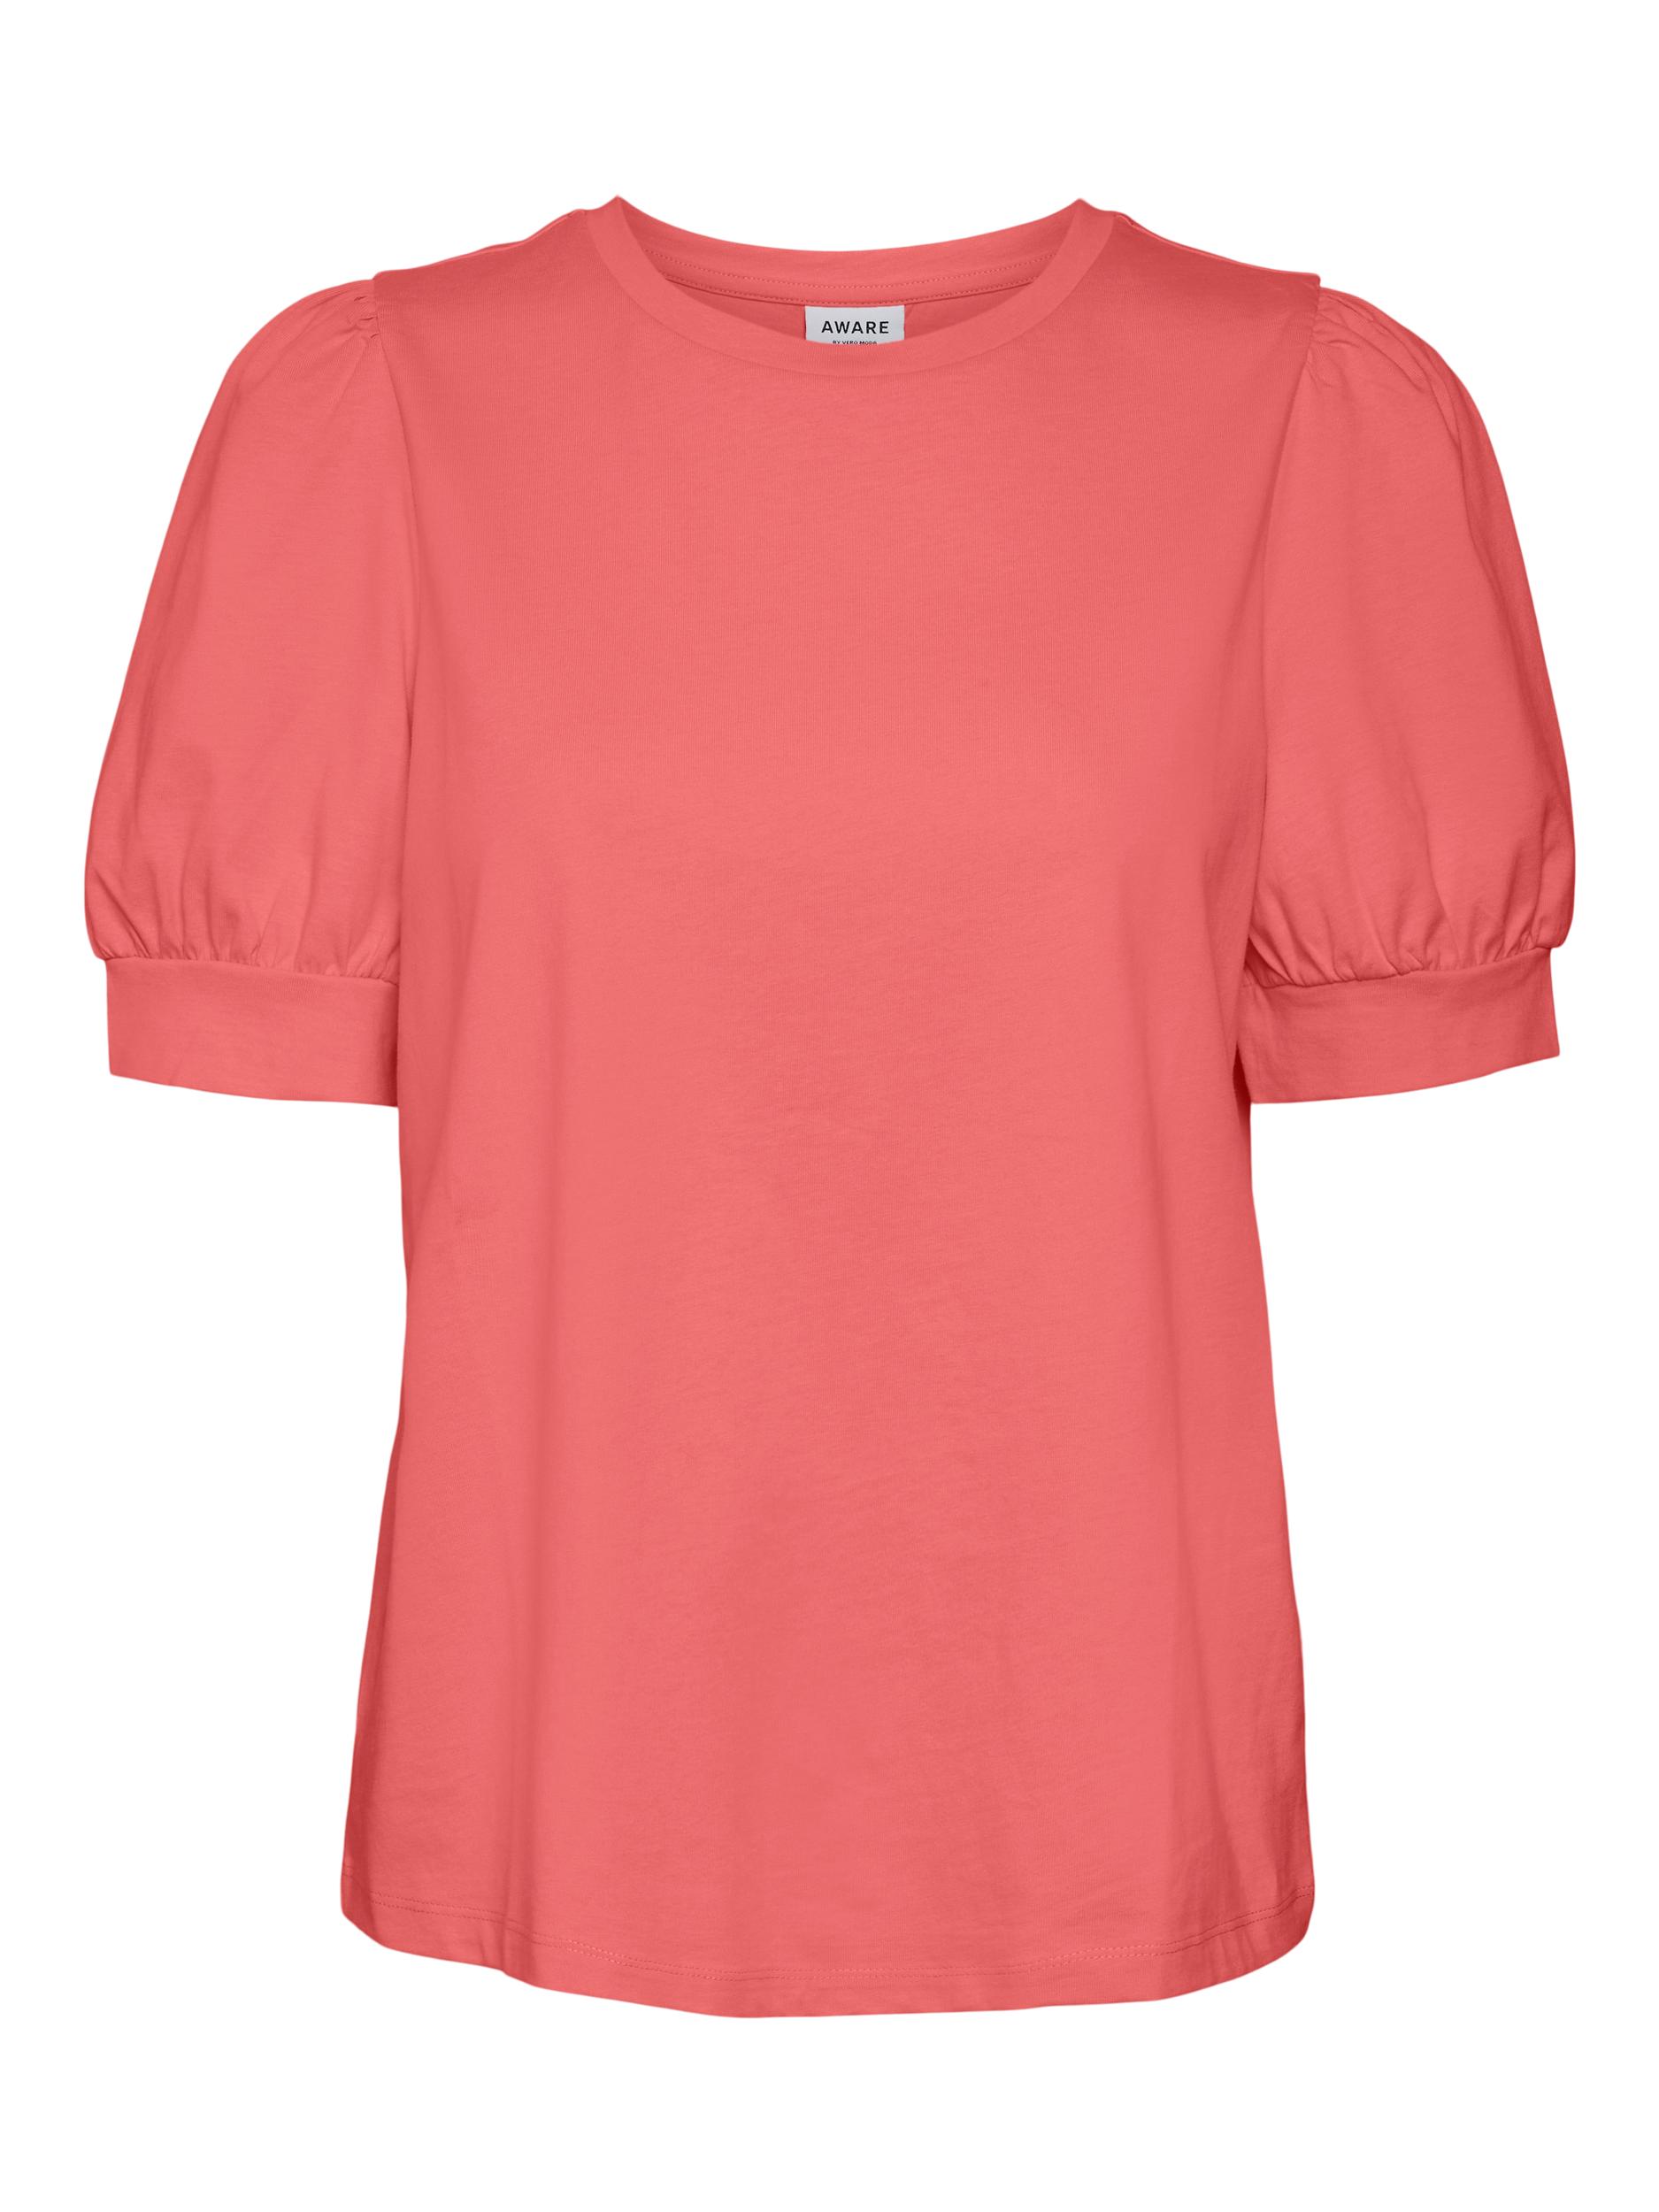 deform Himlen chef Vero Moda Kerry T-shirt, Parfait Pink, S